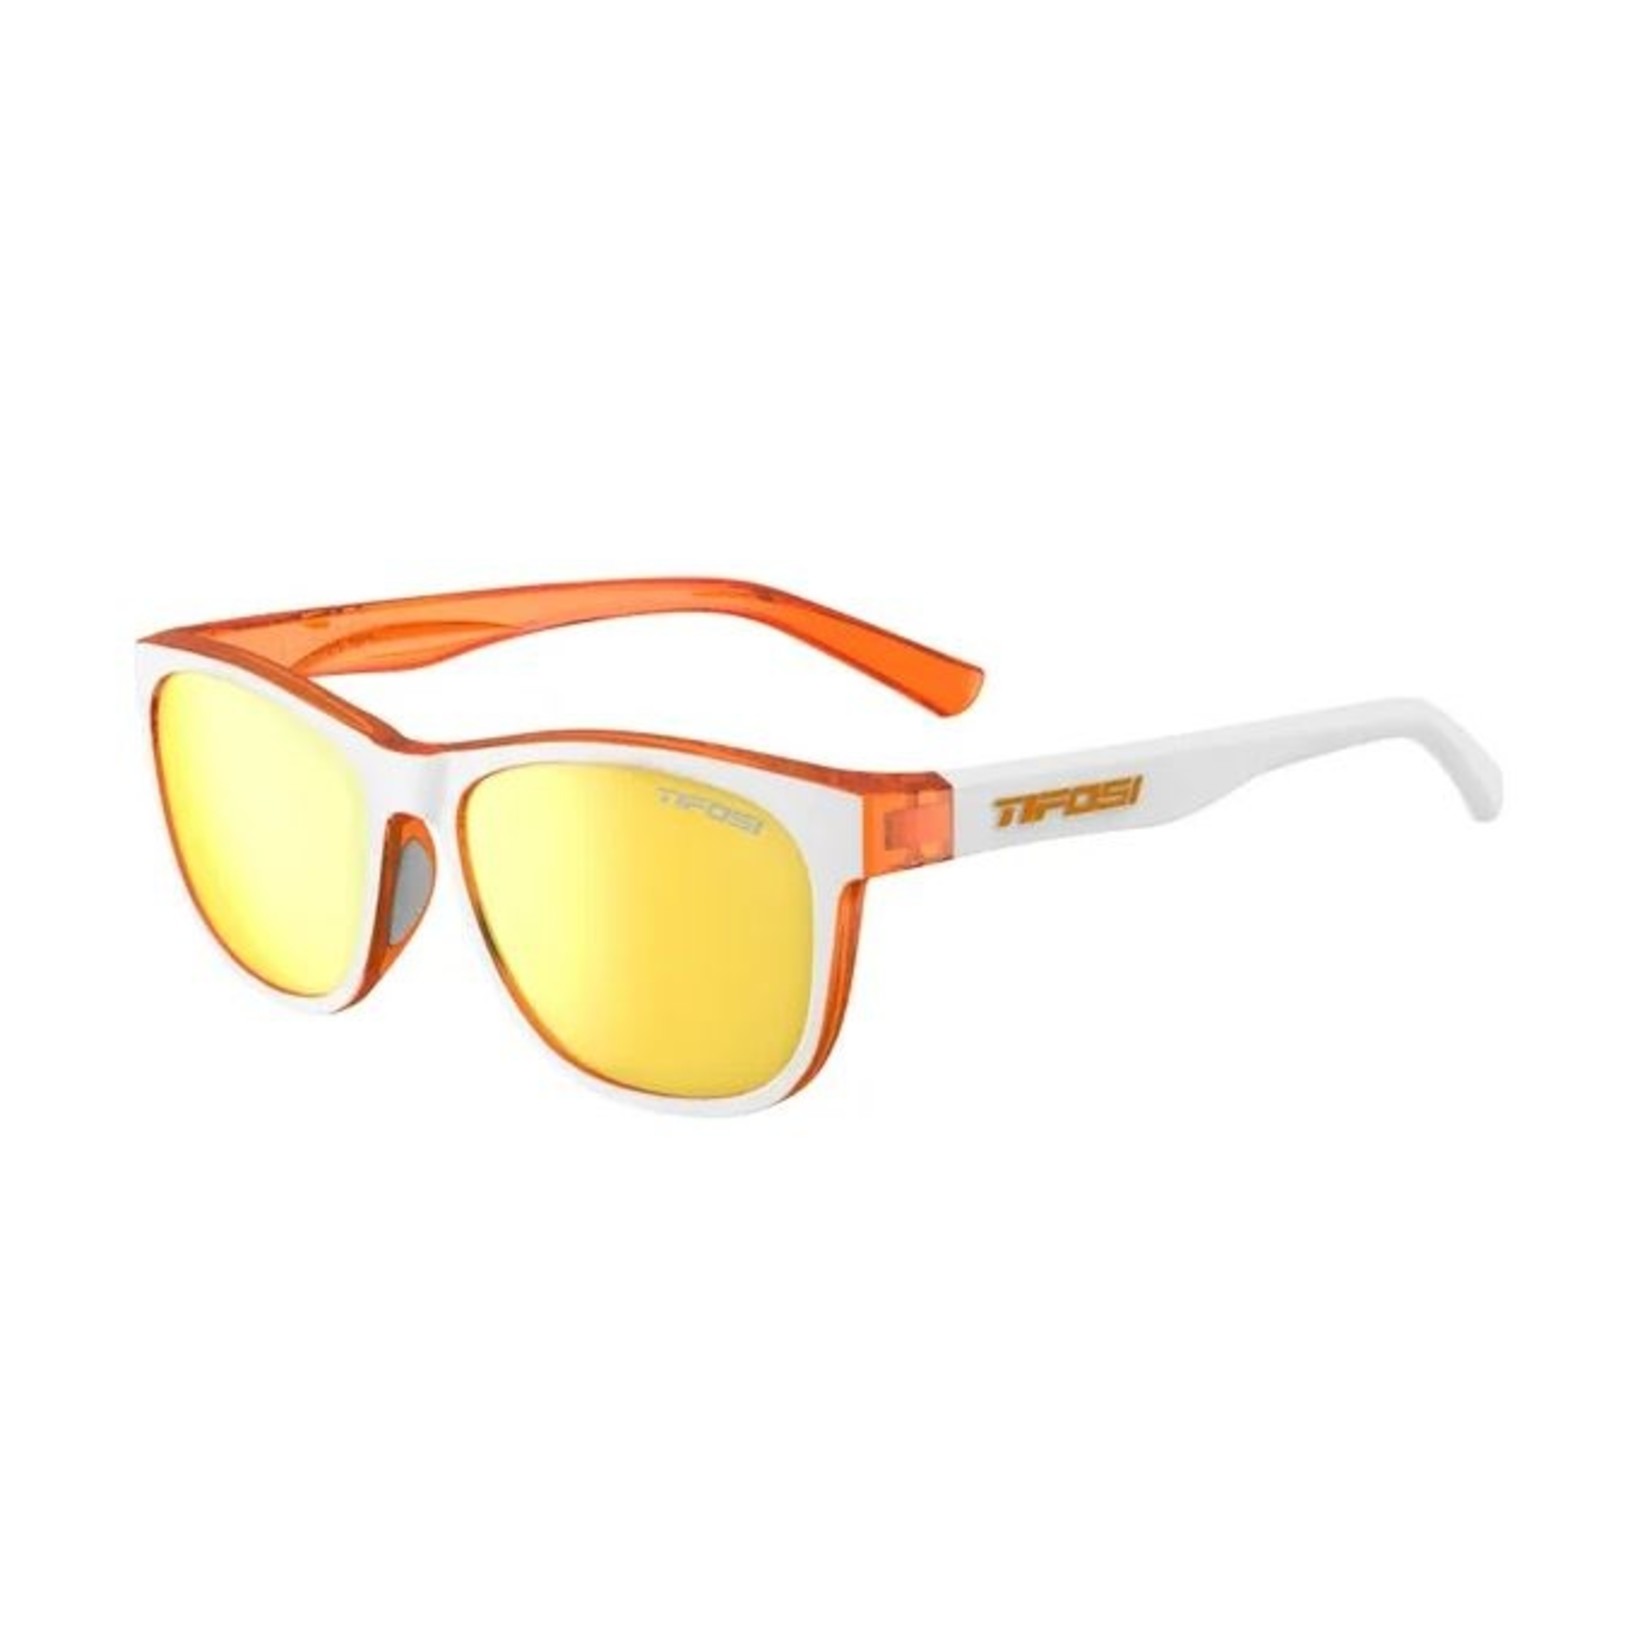 Tifosi Tifosi Cycling Sunglasses - Swank - Smoke Glasses - Yellow Lens - Icicle Orange